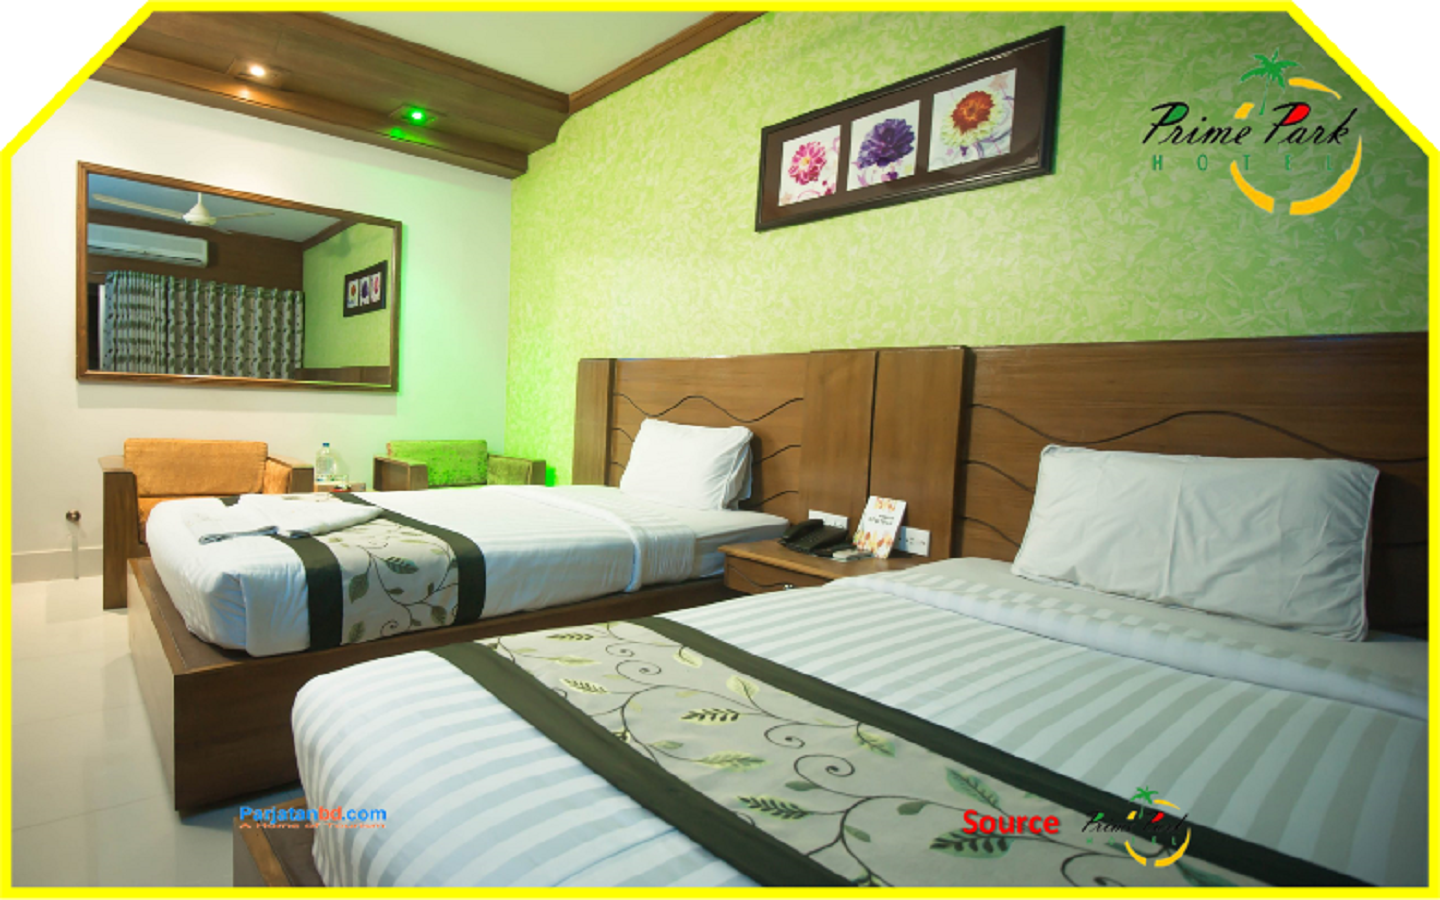 Room Twin Premium Room -1, Prime Park Hotel, Coxs Bazar